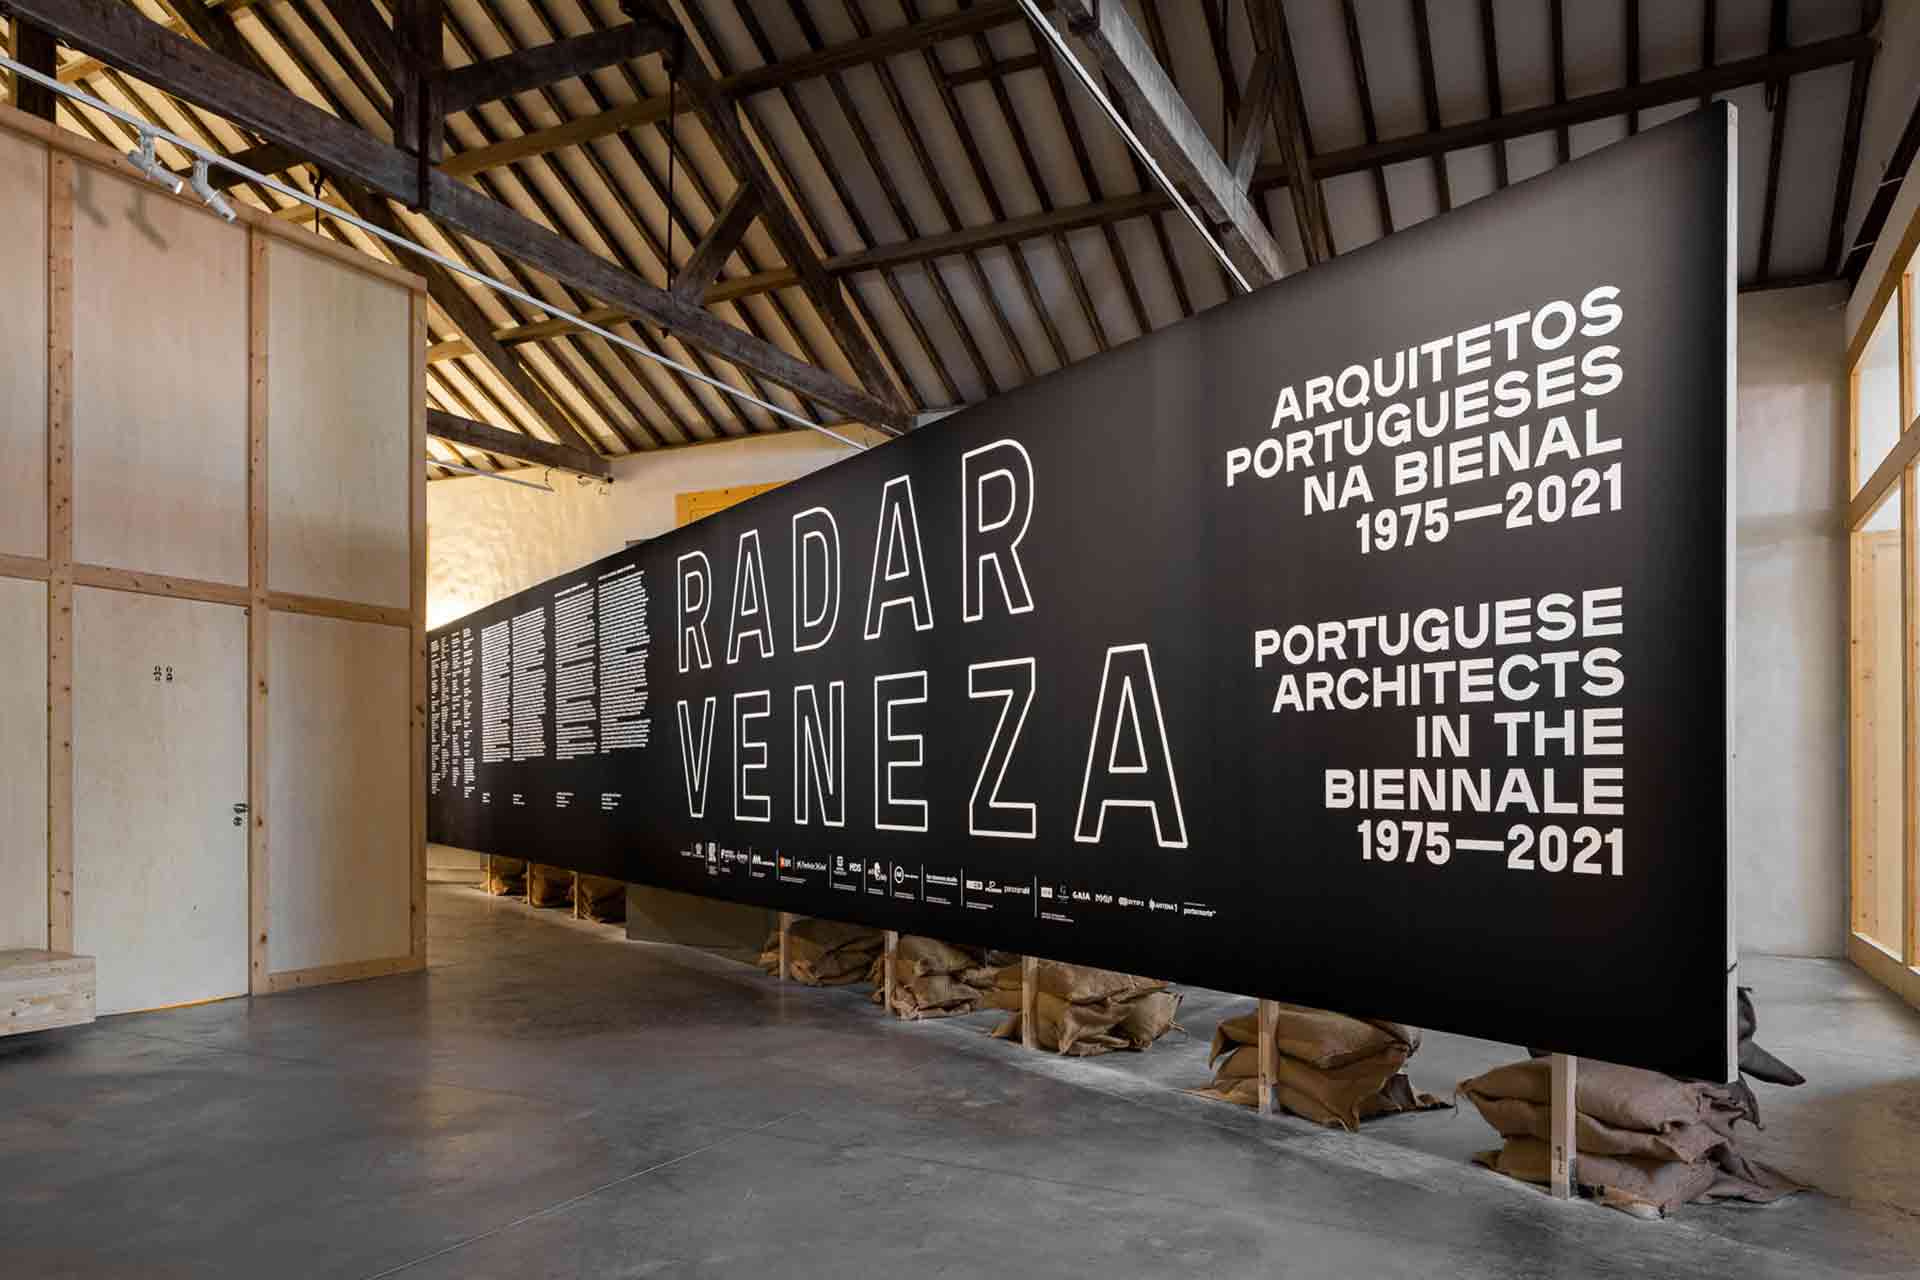 Exposition Temporaire “Radar Veneza – Arquitetos Portugueses na Bienal 1975-2021”, 2022